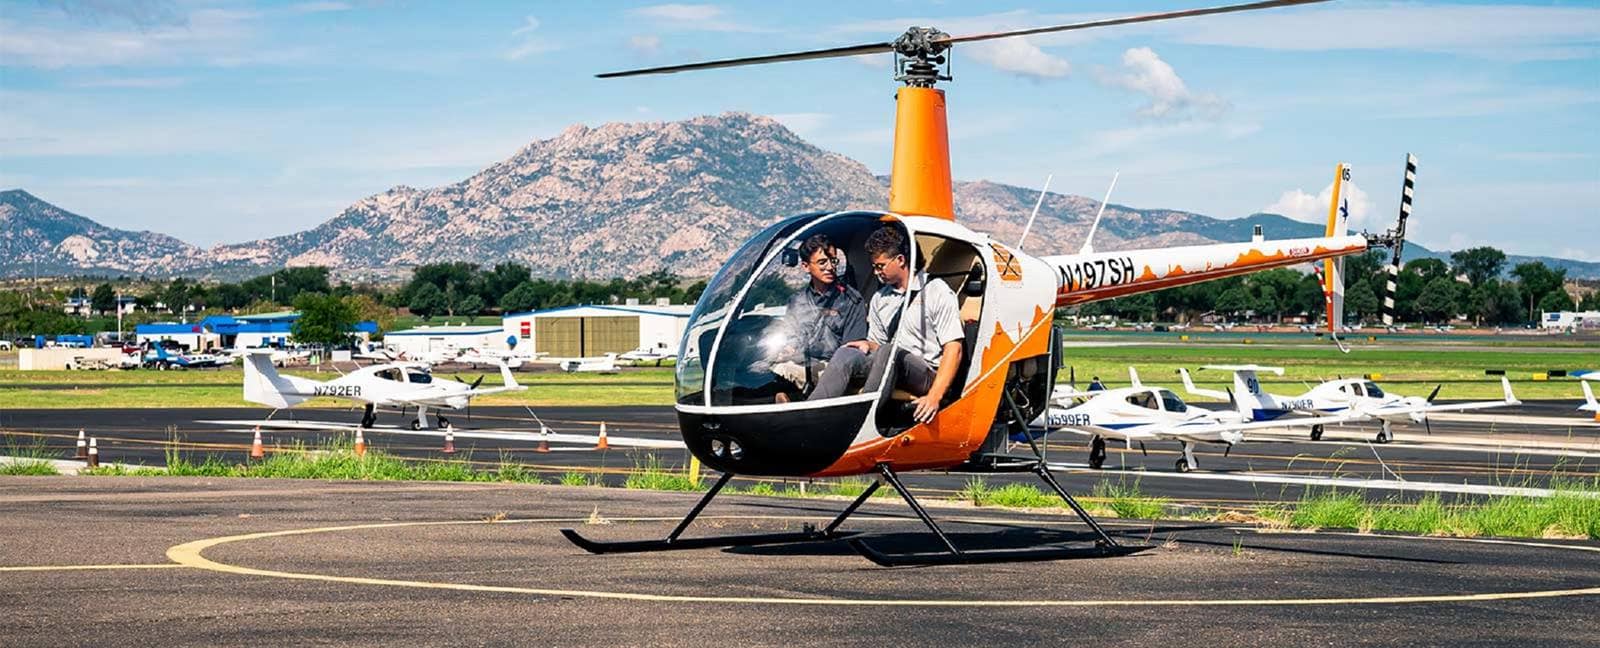 Helicopter flight training at the Helicopter Institute, Prescott, Arizona, Embry-Riddle Aeronautical University, Photographer, Connor McShane, 2022